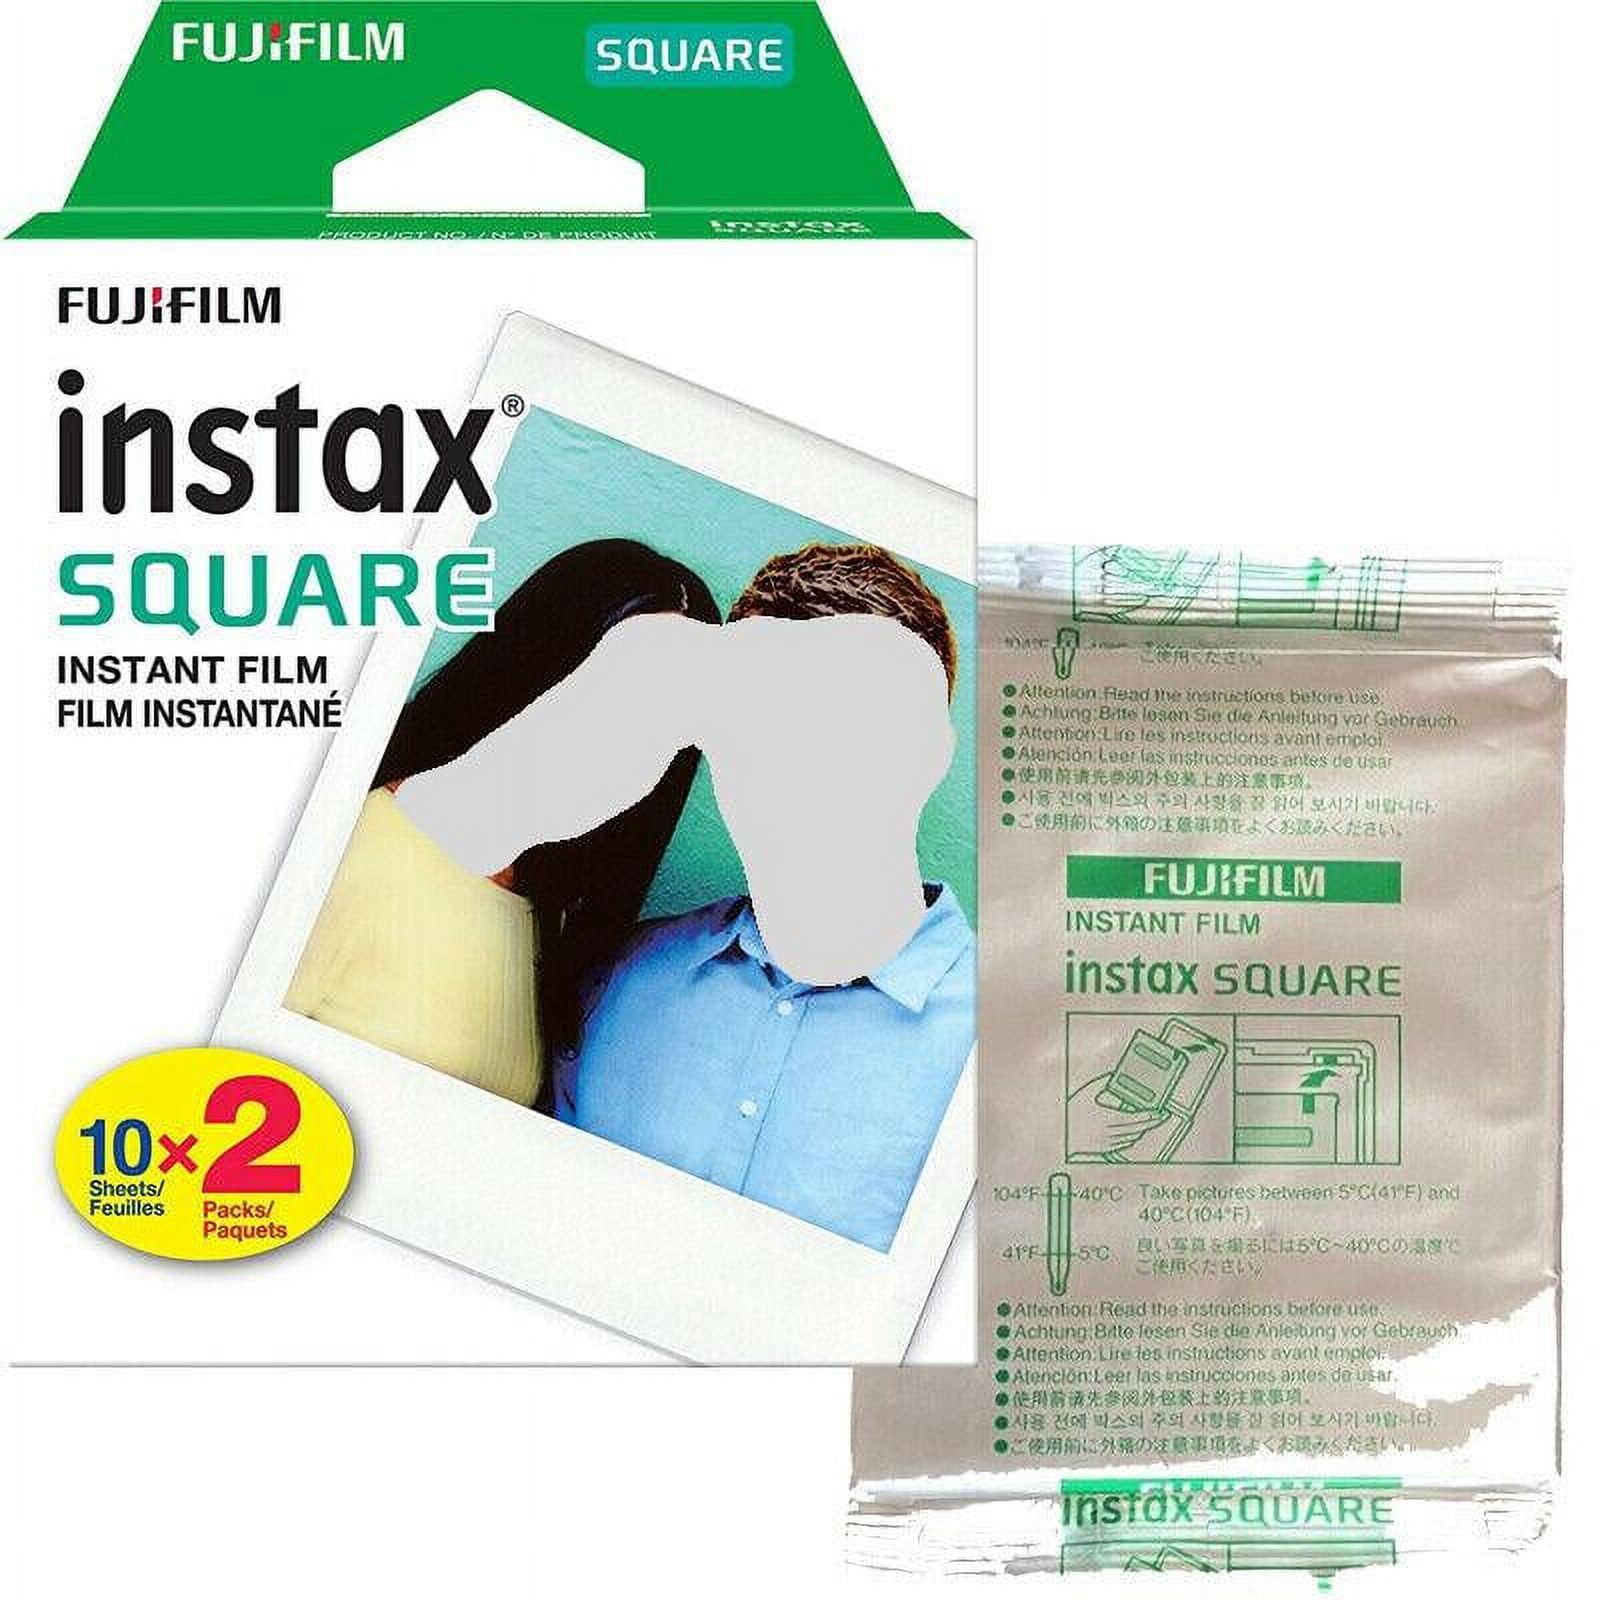 Film Fuji Instax Square 2x10 photos 